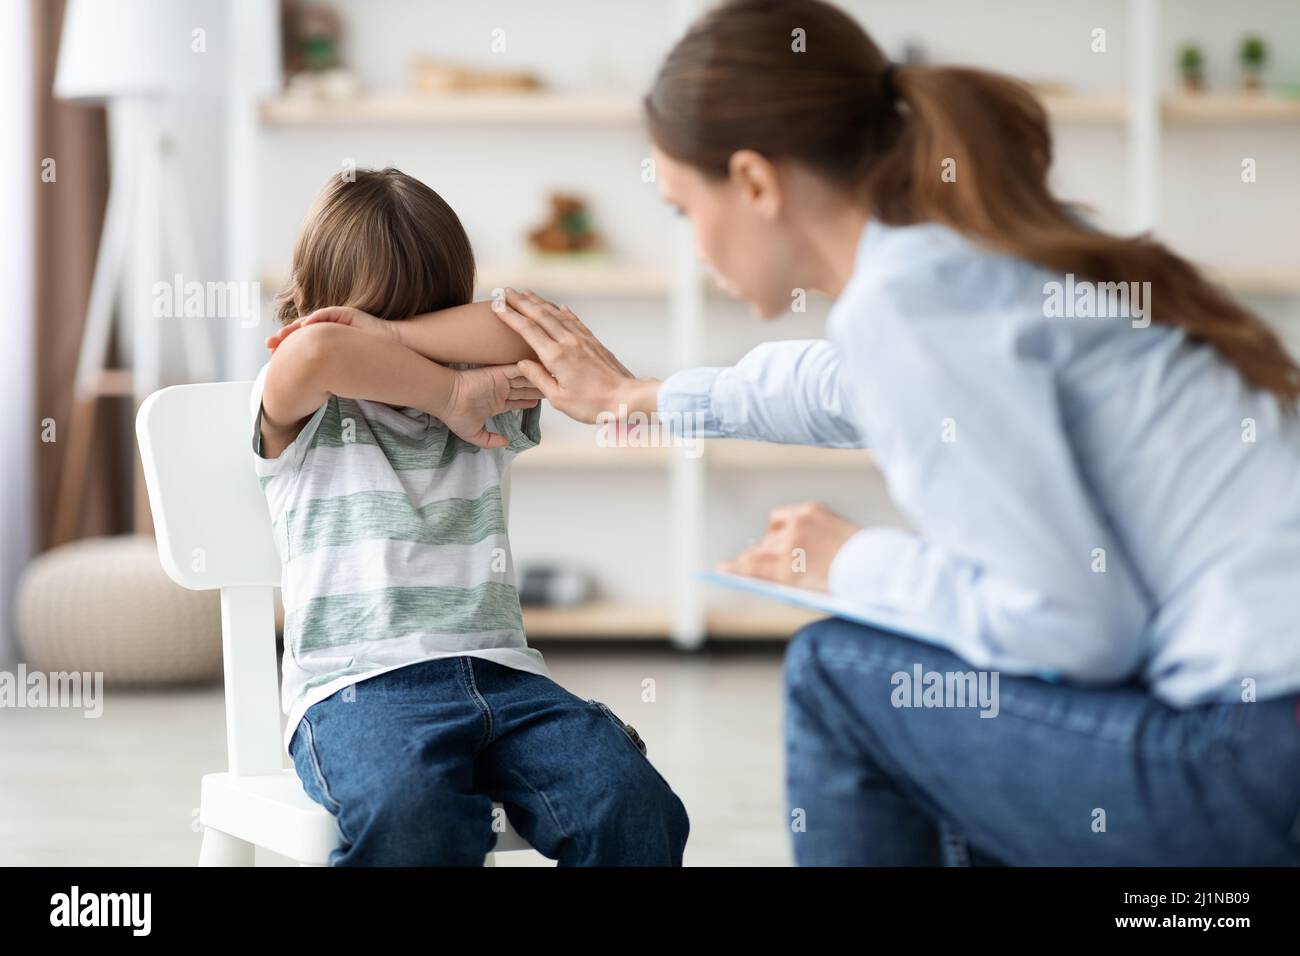 Kids communication blocks. Little scared boy hiding face behind hands, ignoring caring woman psychologist Stock Photo